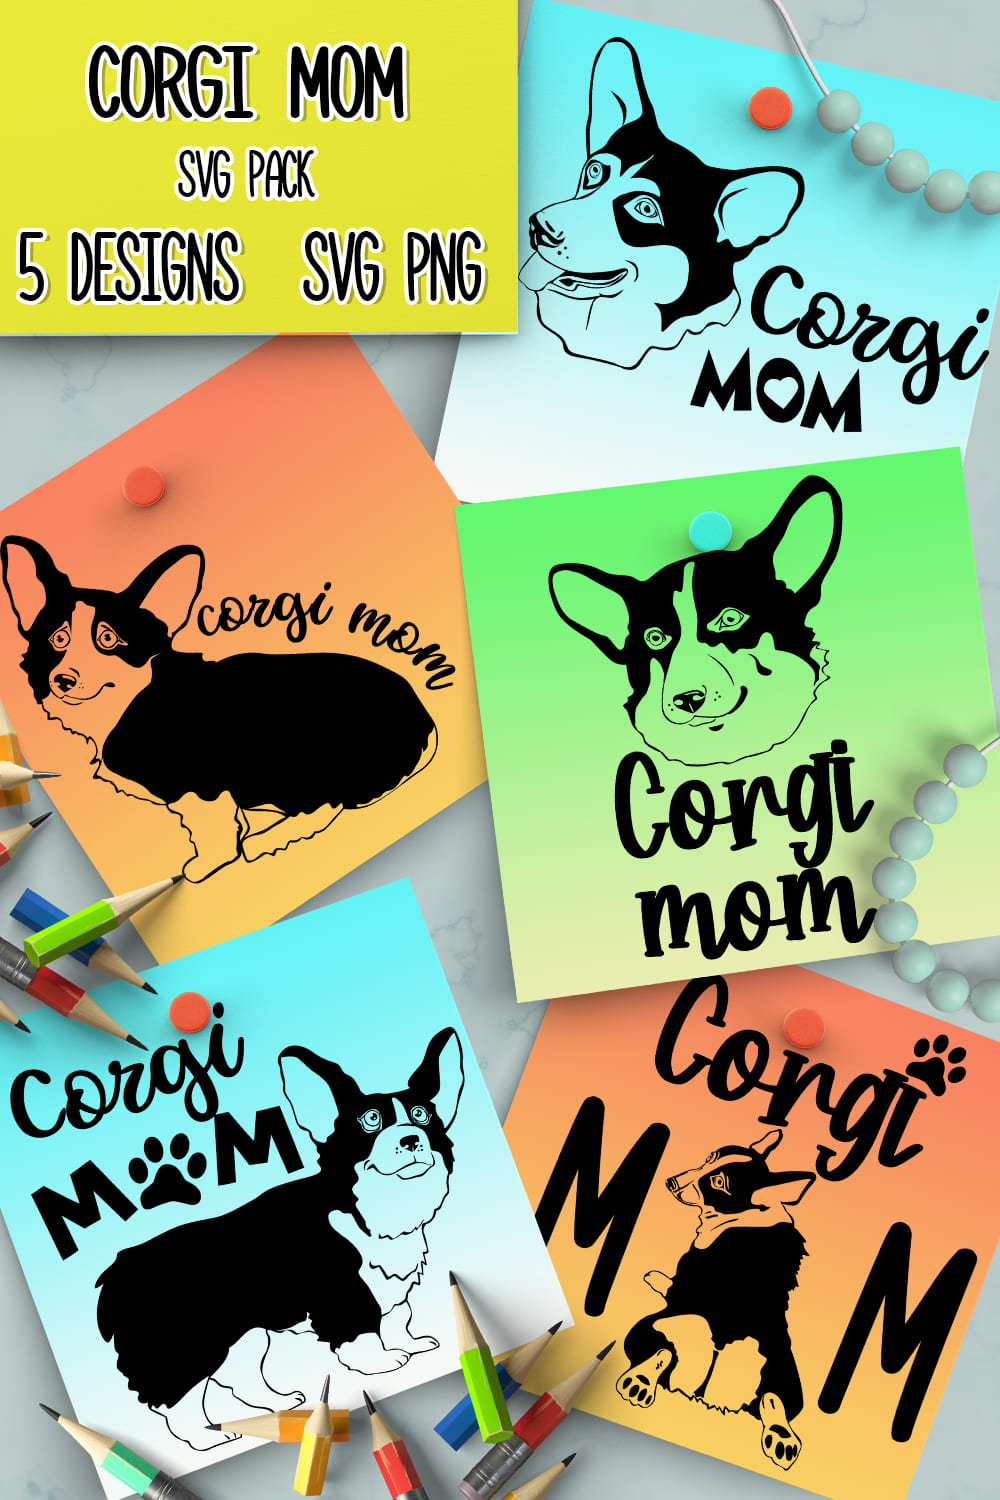 Colorful corgi illustrations.